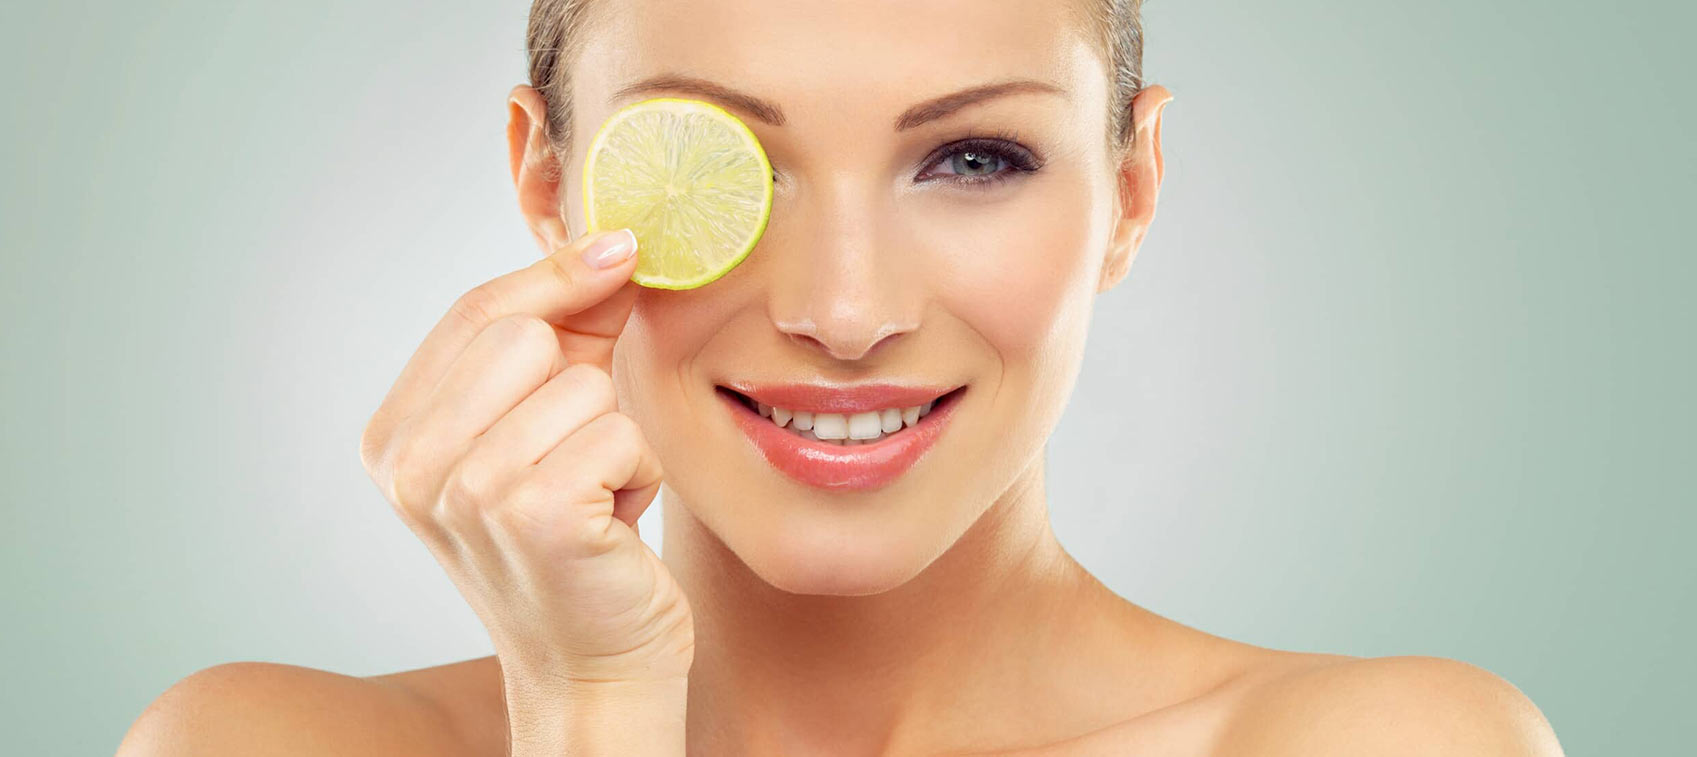 lemon juice for acne